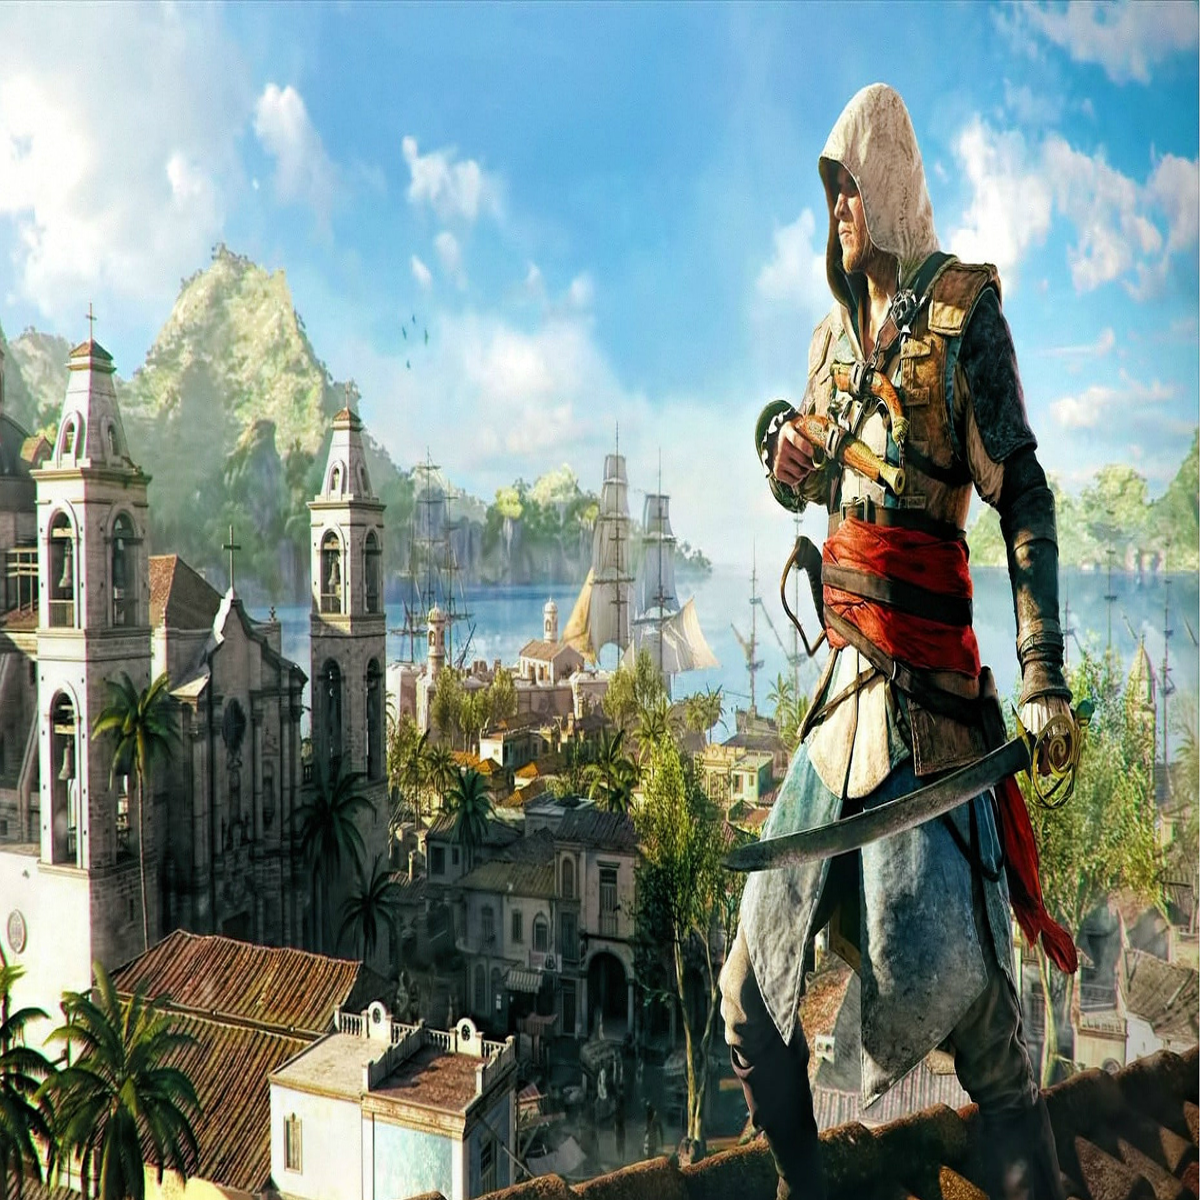 Assassins Creed Rogue Switch